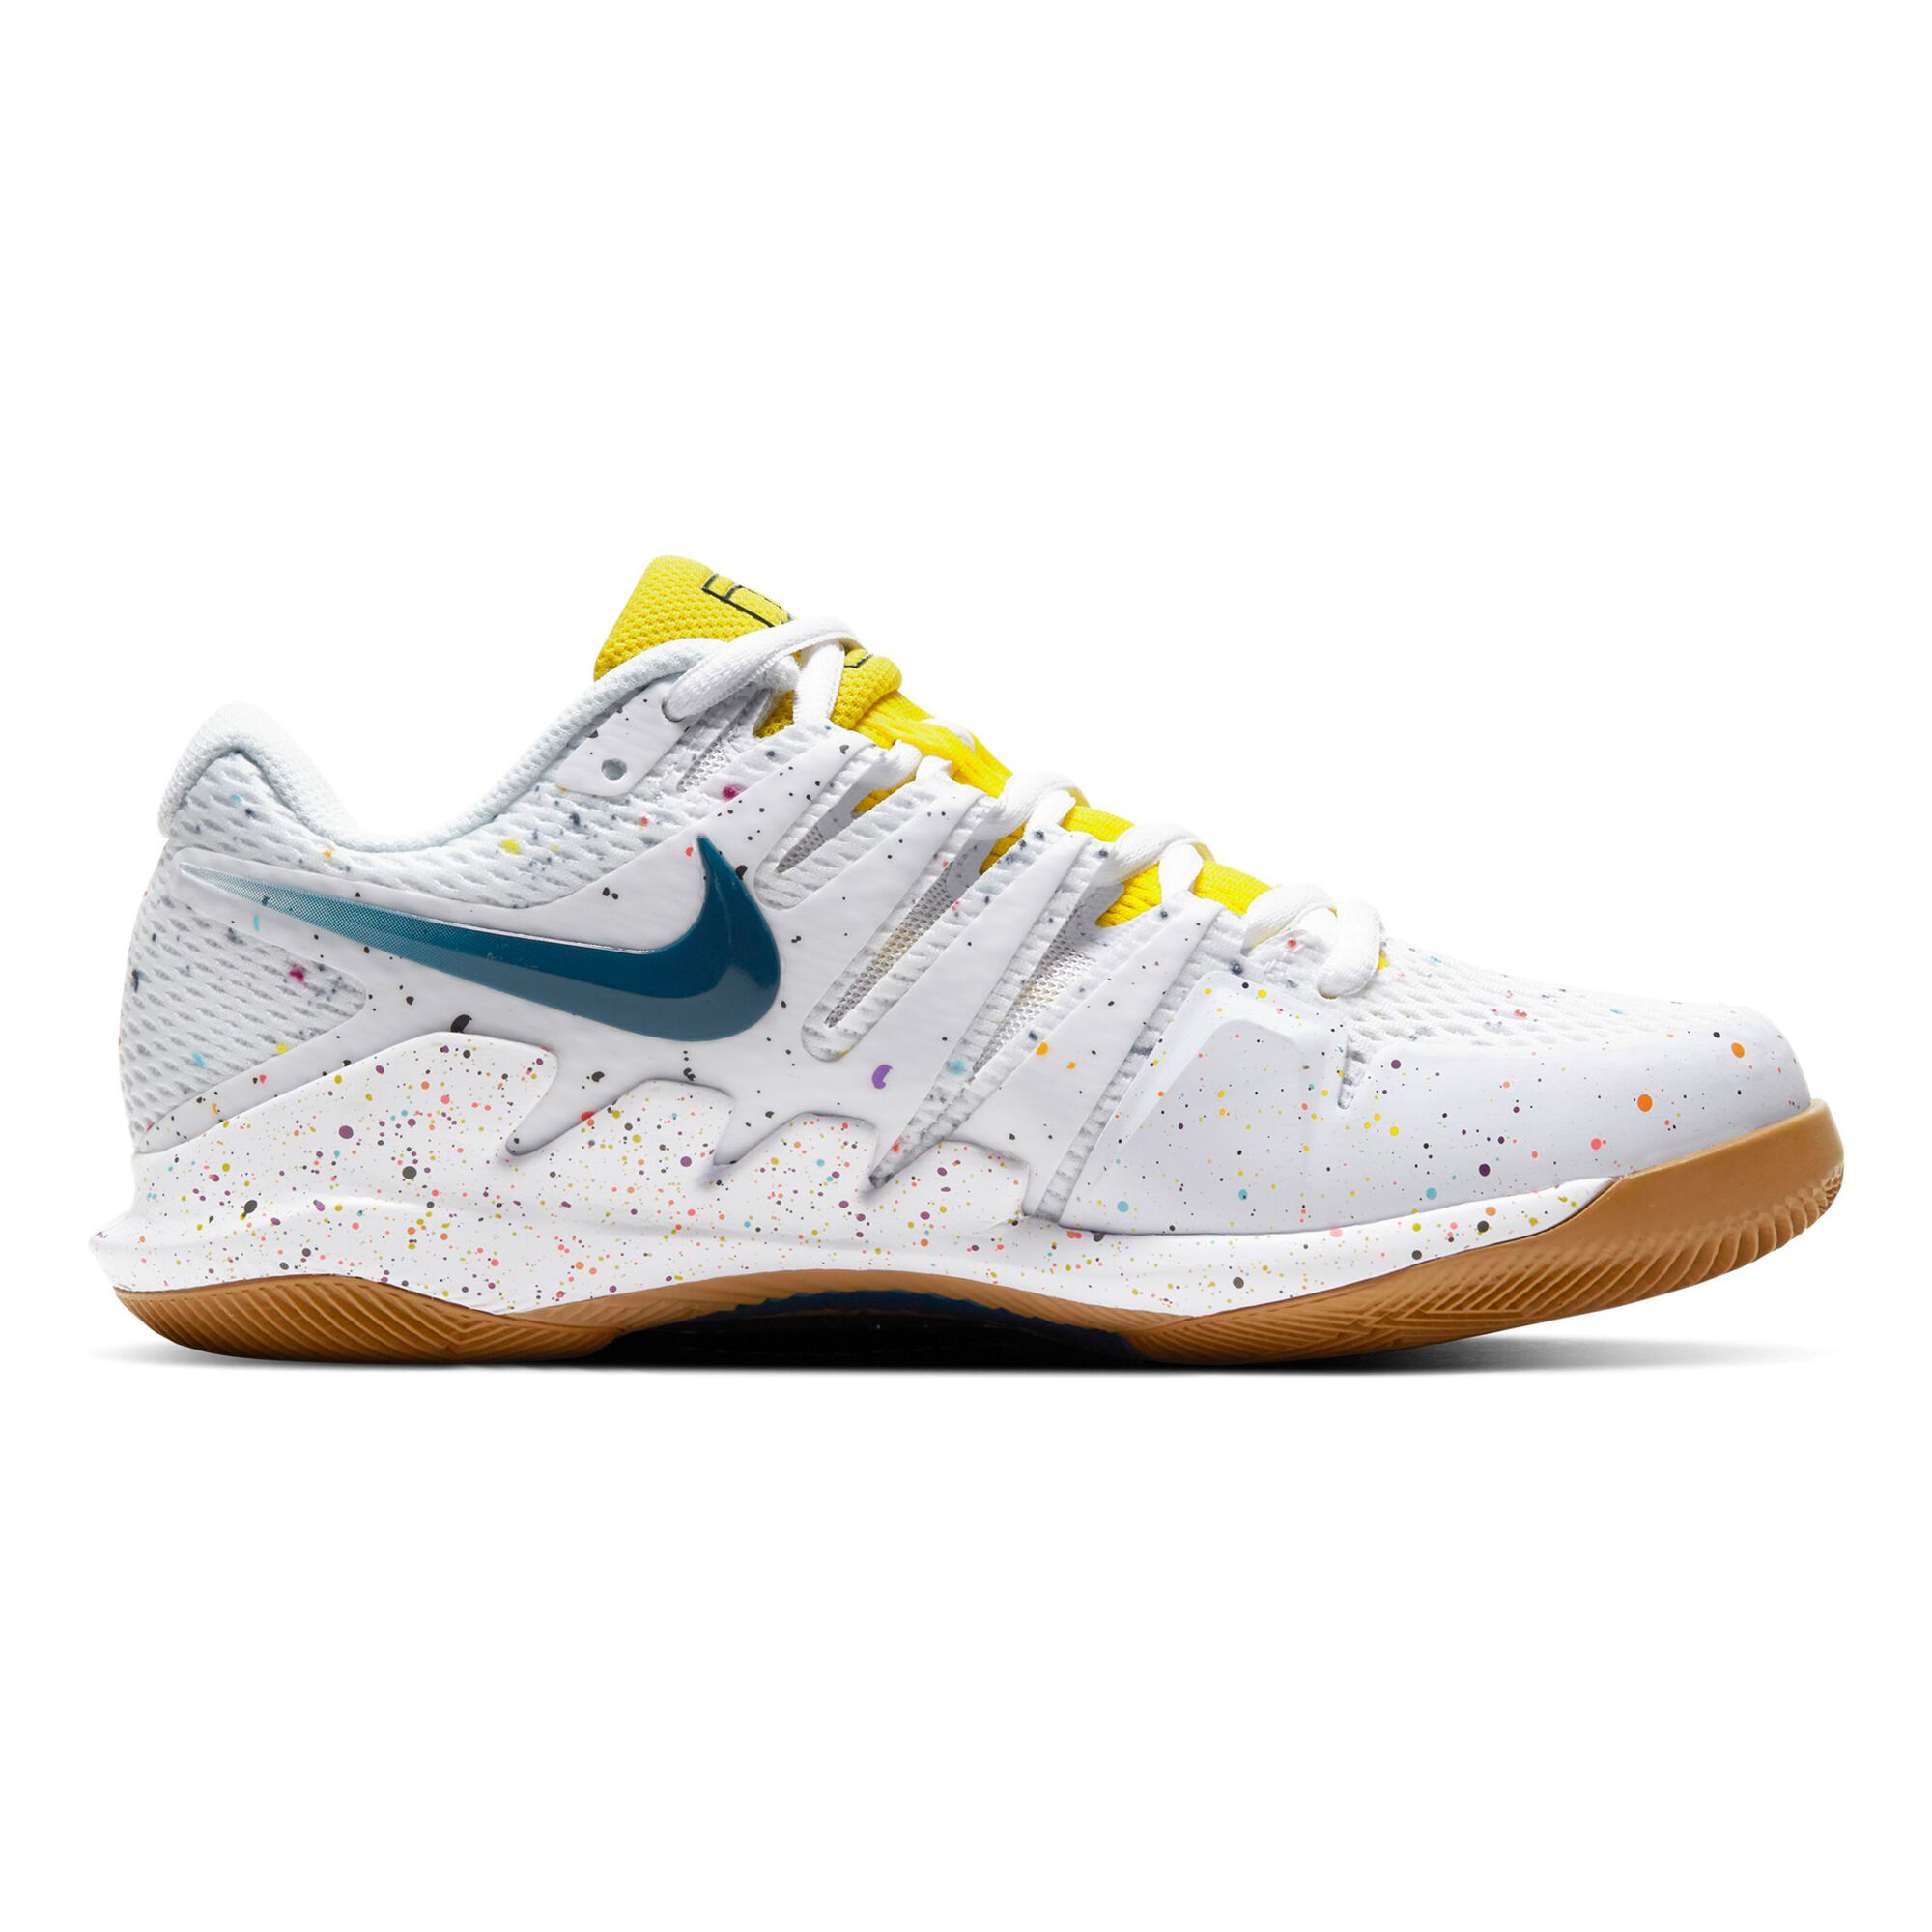 buy Nike Air Zoom Vapor X All Court Shoe Women - White, Blue online ...